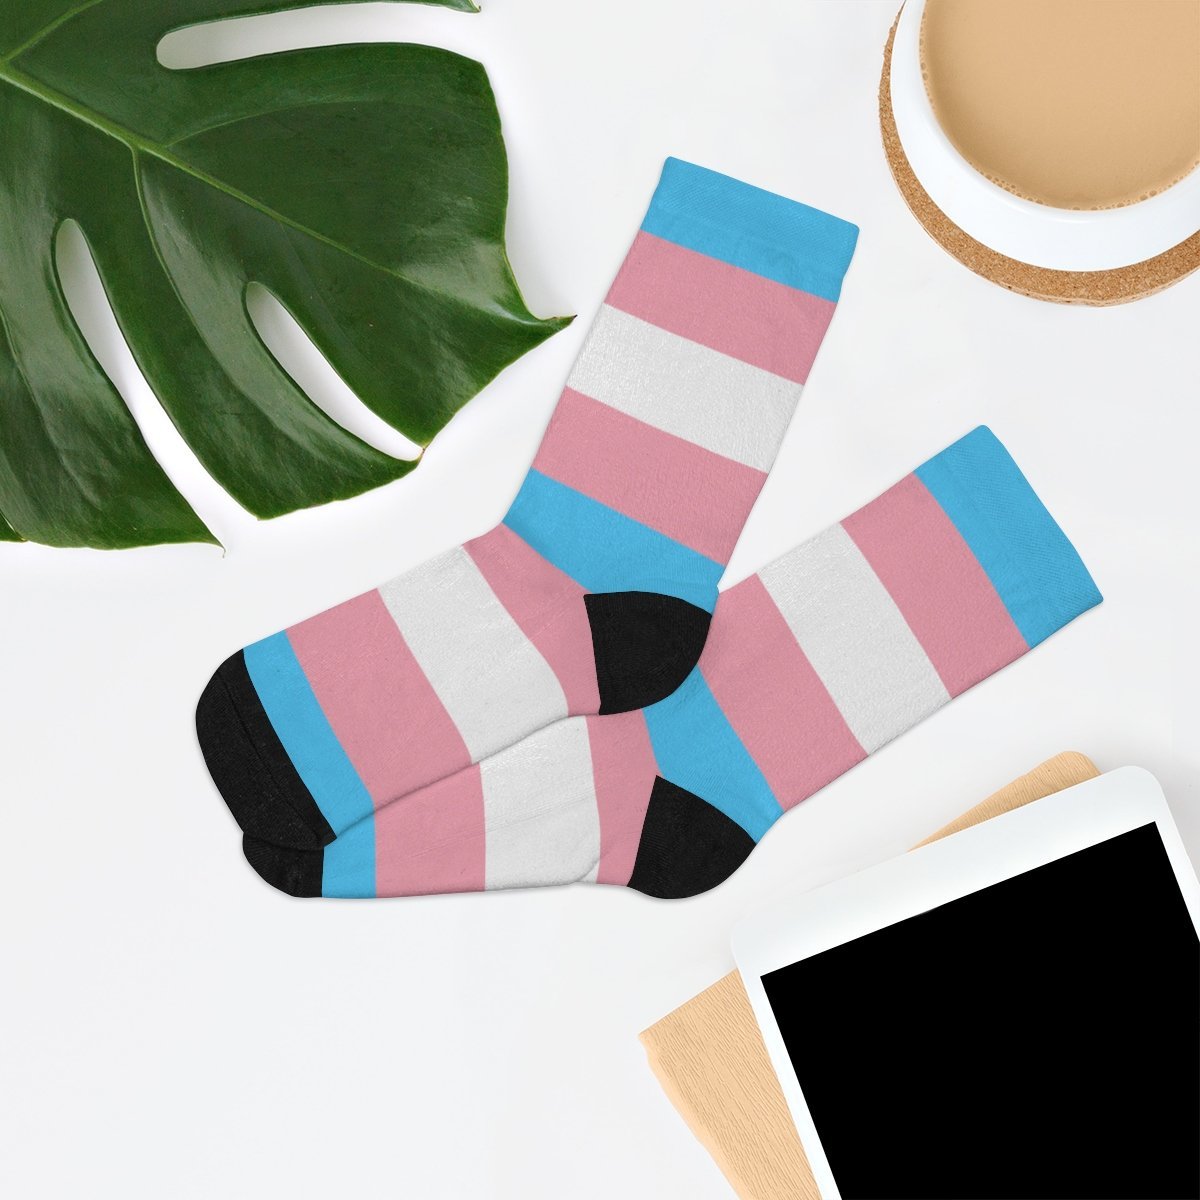 Transgender Flag Socks - On Trend Shirts